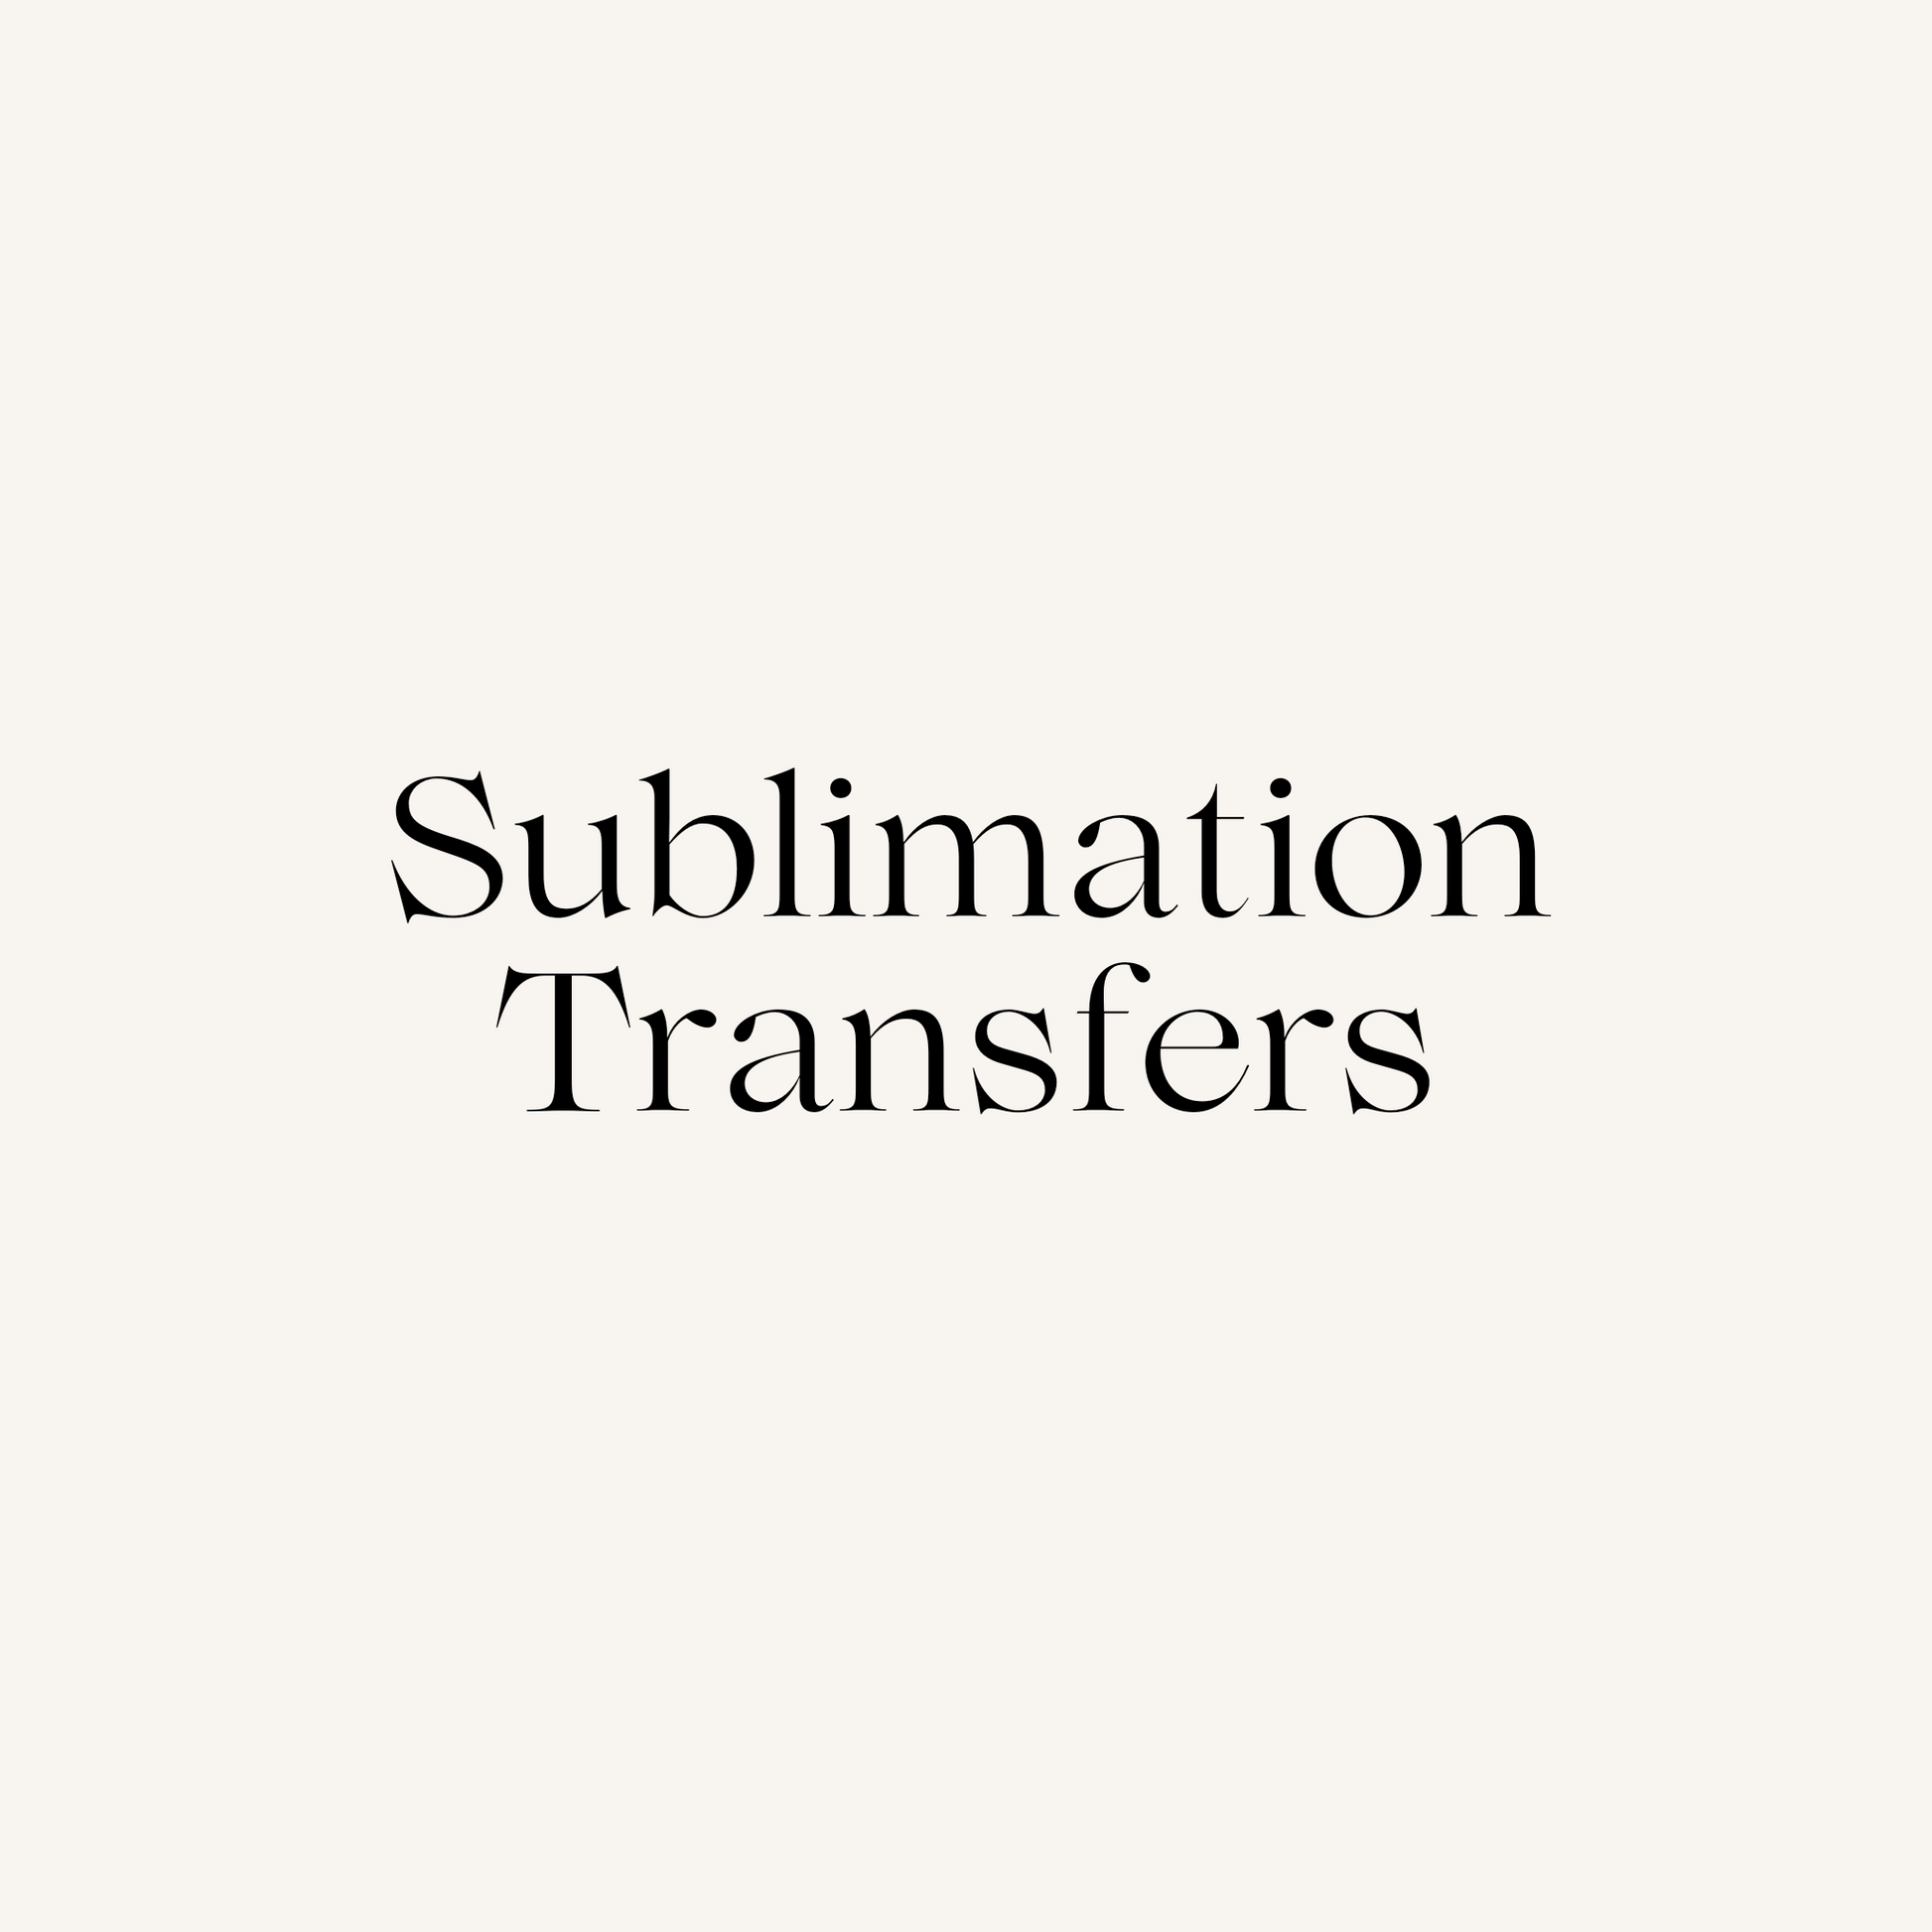 Youth/ Toddler/ Infant - Custom Sublimation Transfers – BamaTexas